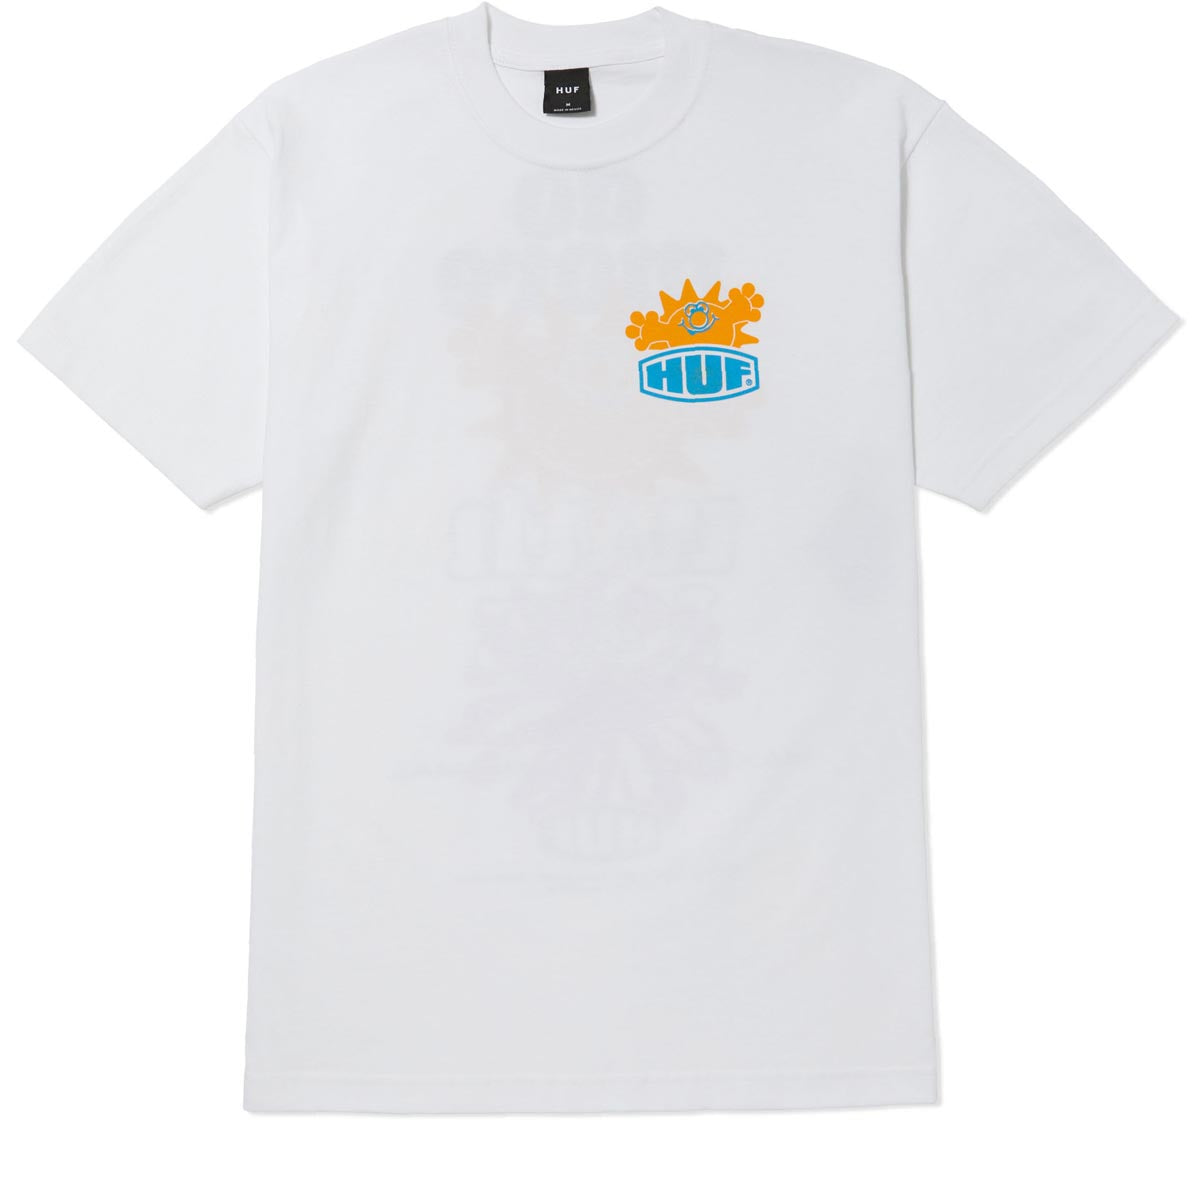 HUF Maximize T-Shirt - White image 2